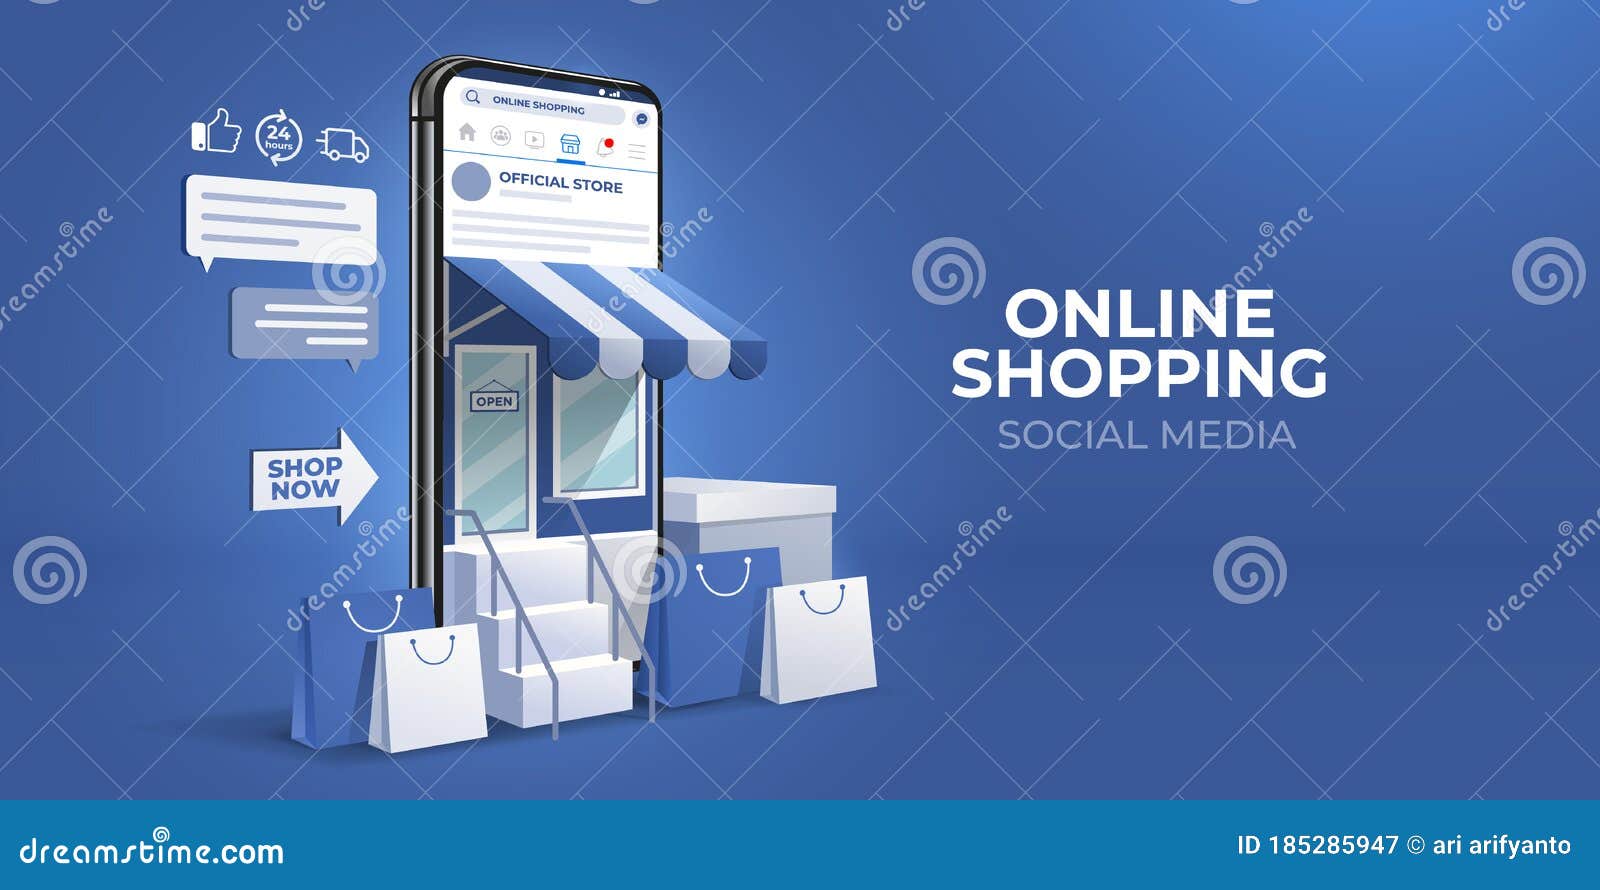 online shopping on social media. mobile store application concept